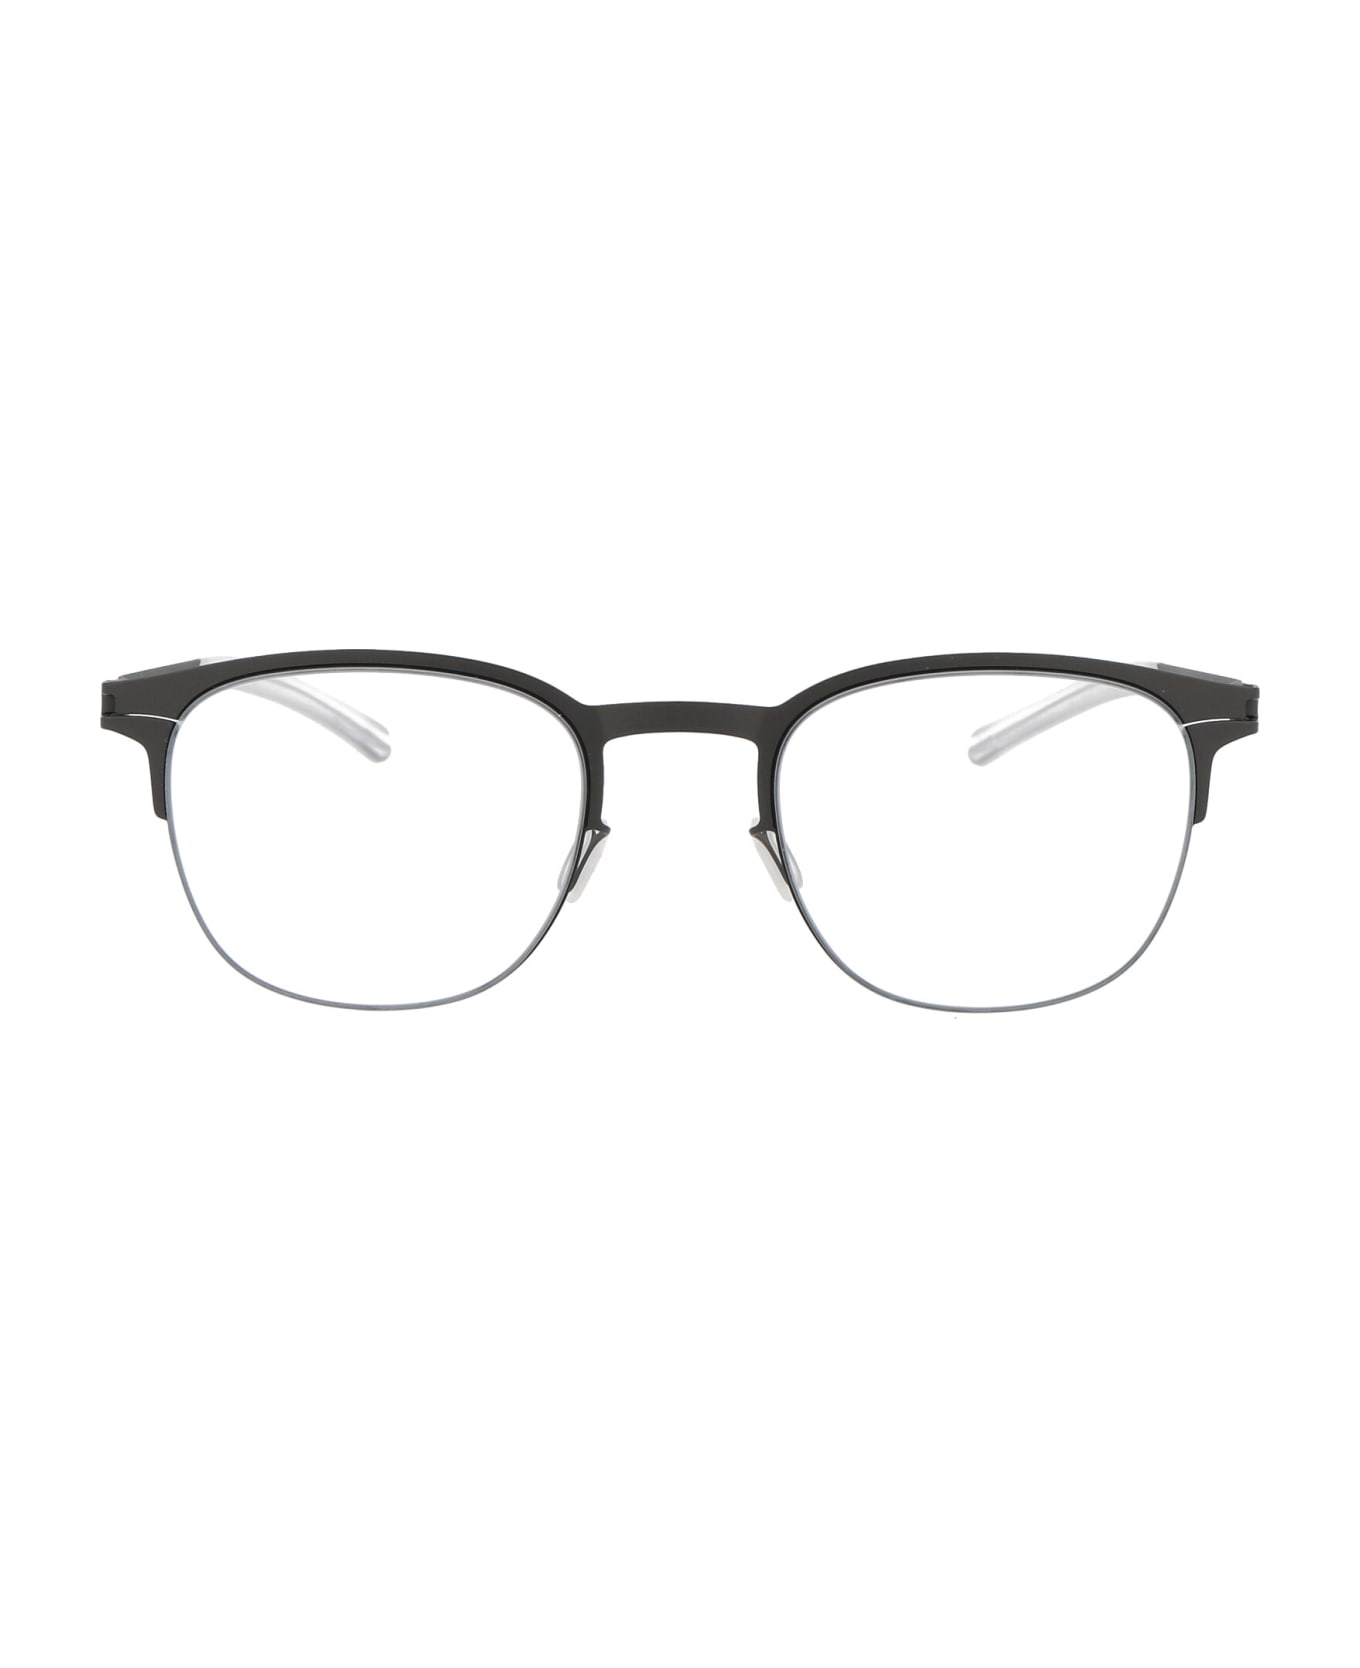 Mykita Neville Glasses - 515 Storm Grey/Black Clear